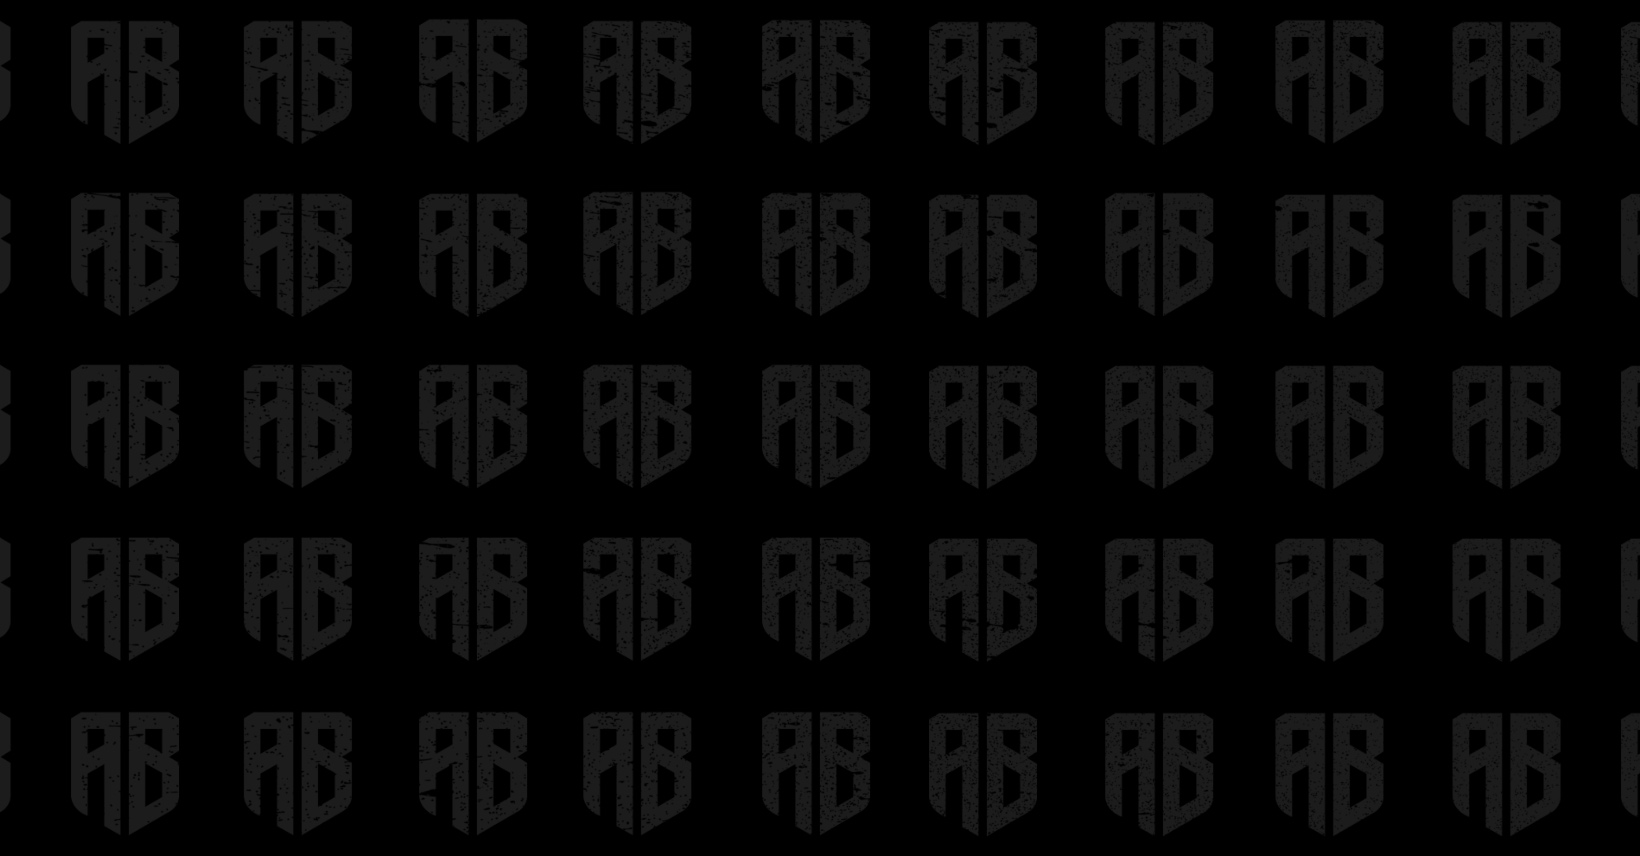 Sifu Alan Baker back drop with the "AB" logo